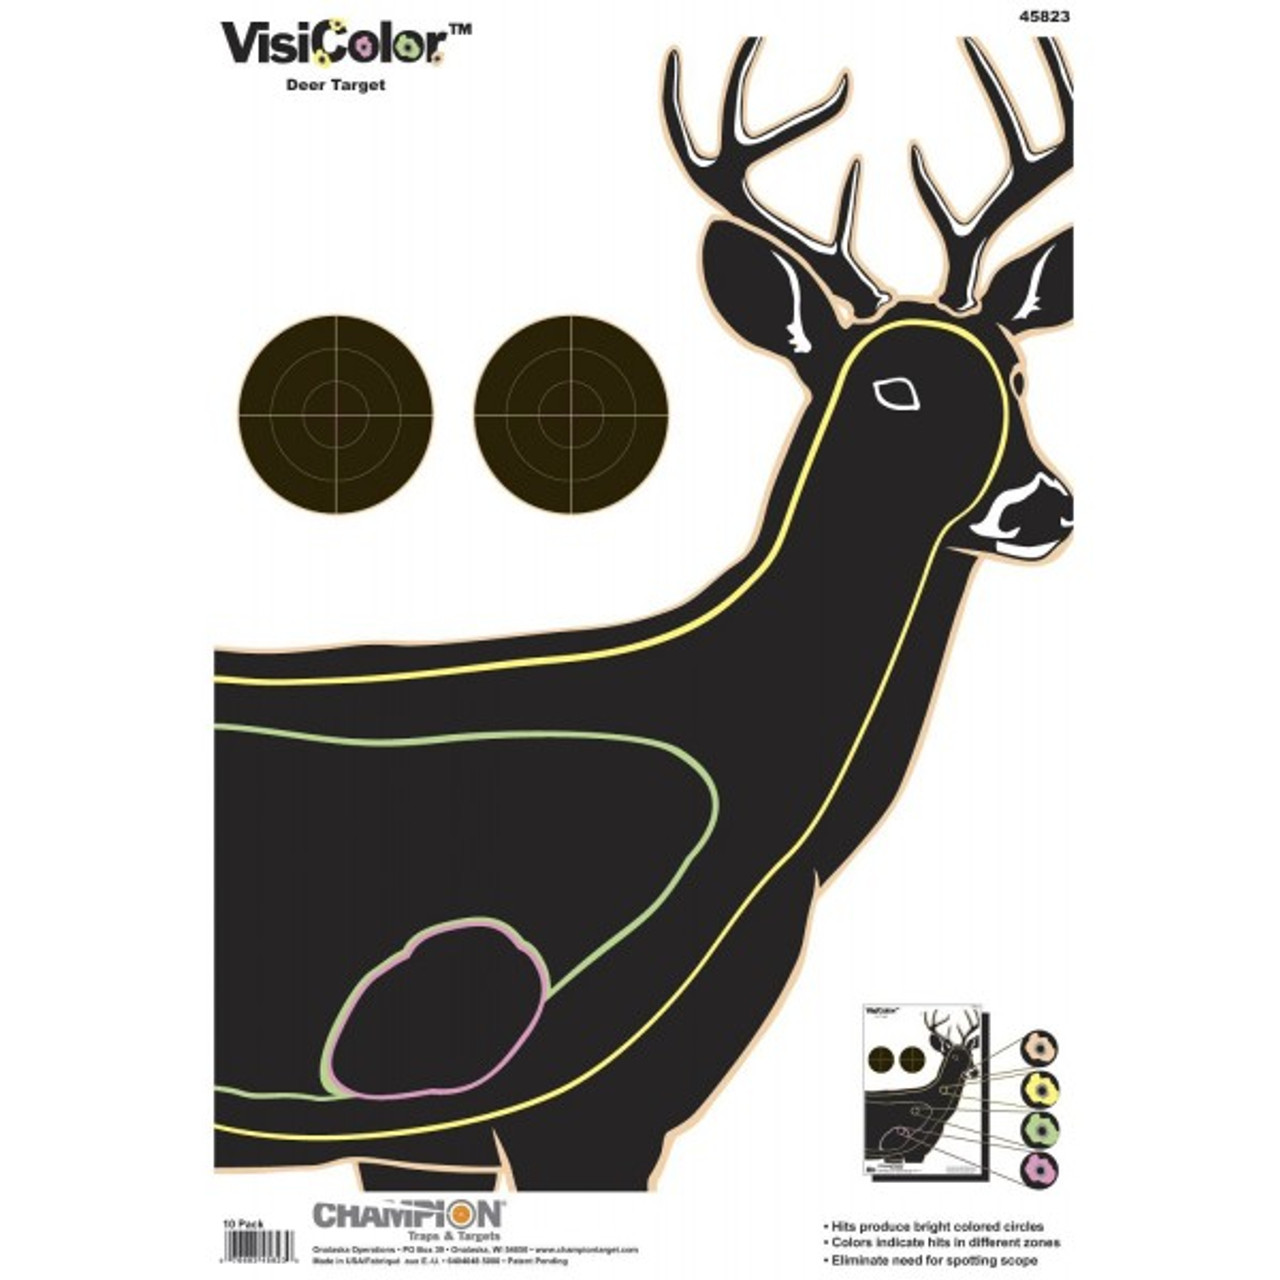 Champion VisiColor Deer Target 10 pack